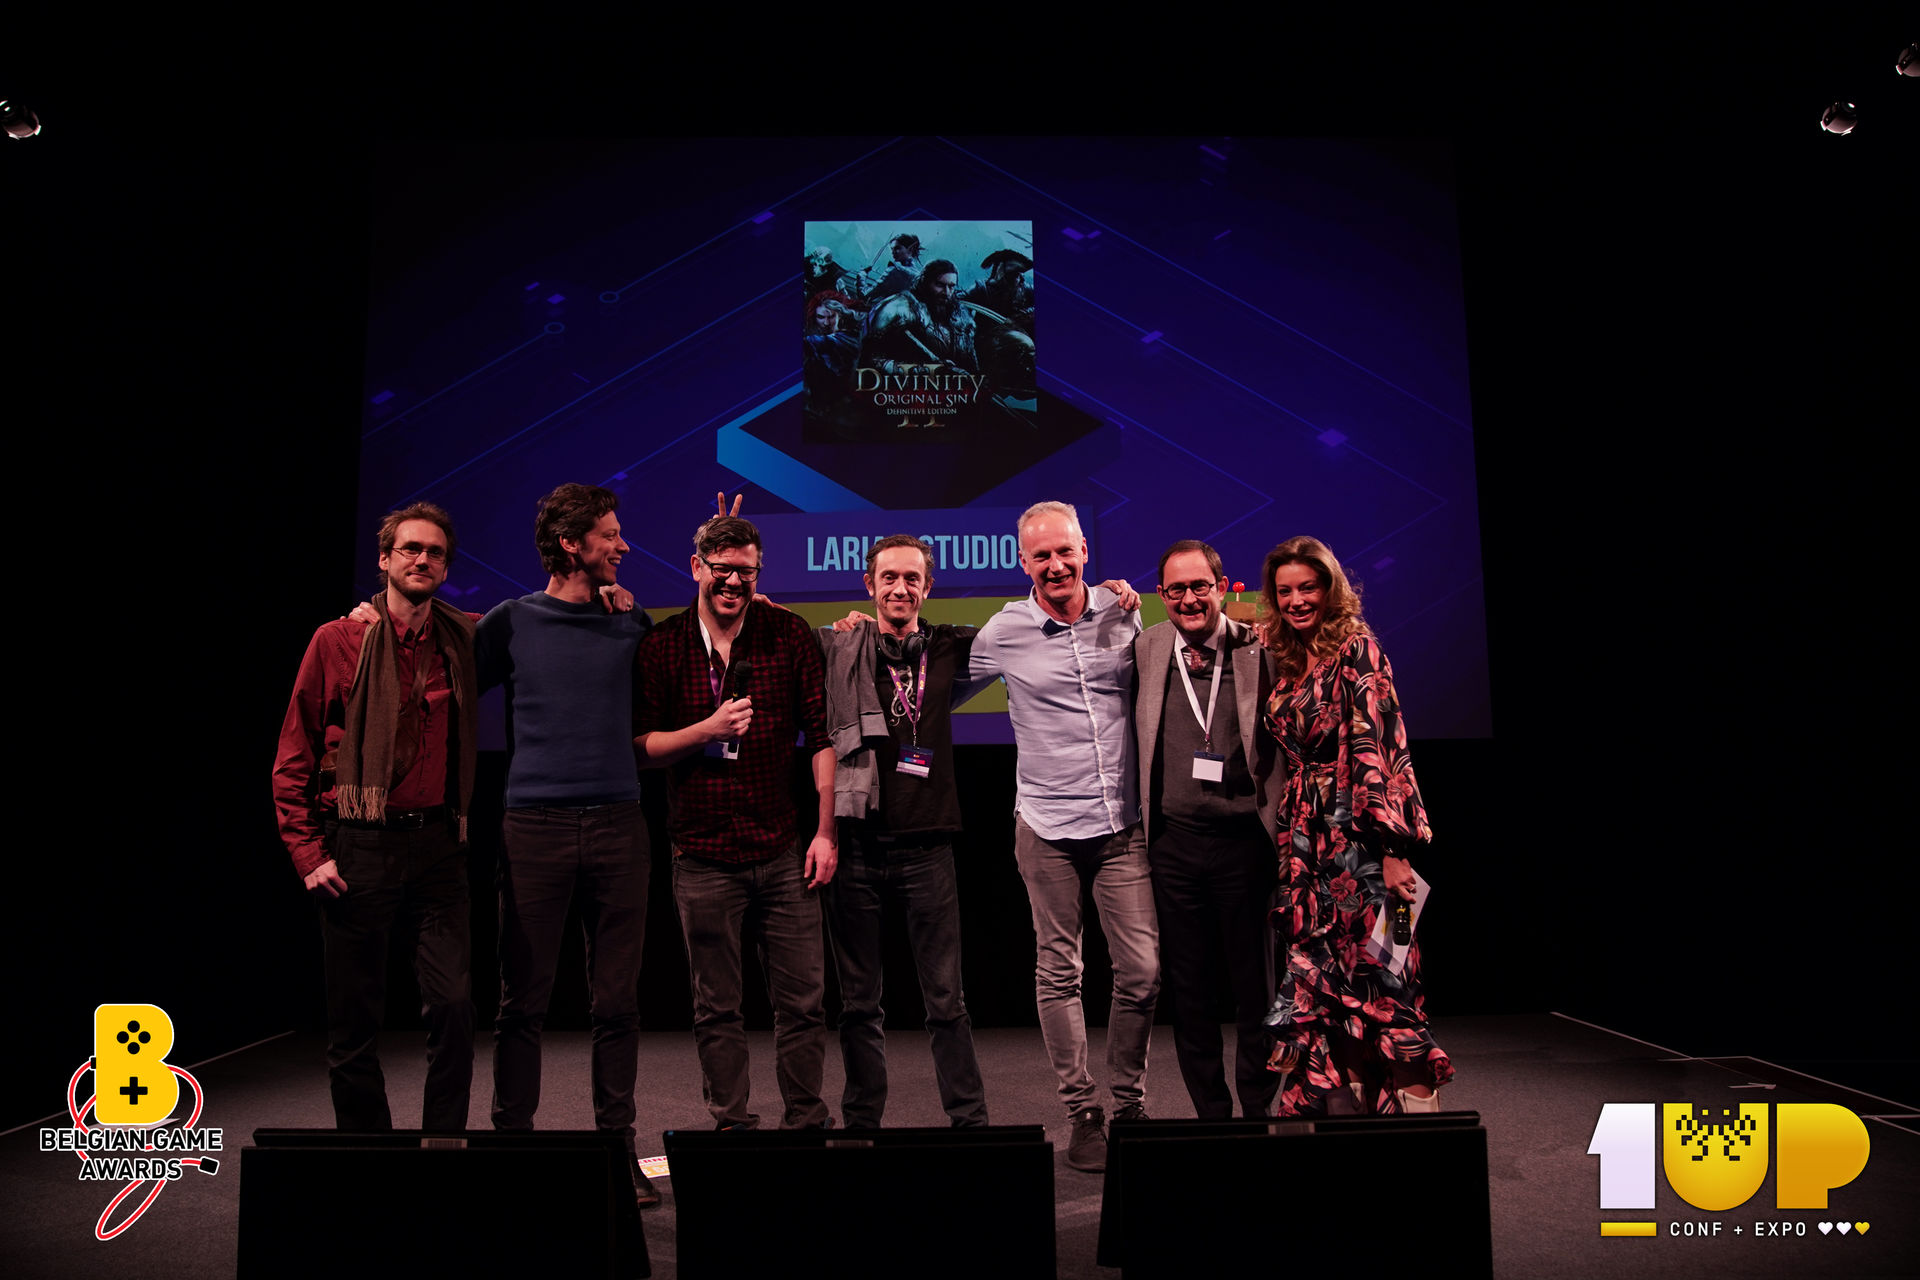 Belgium games awards 2019 ceremony 2 1